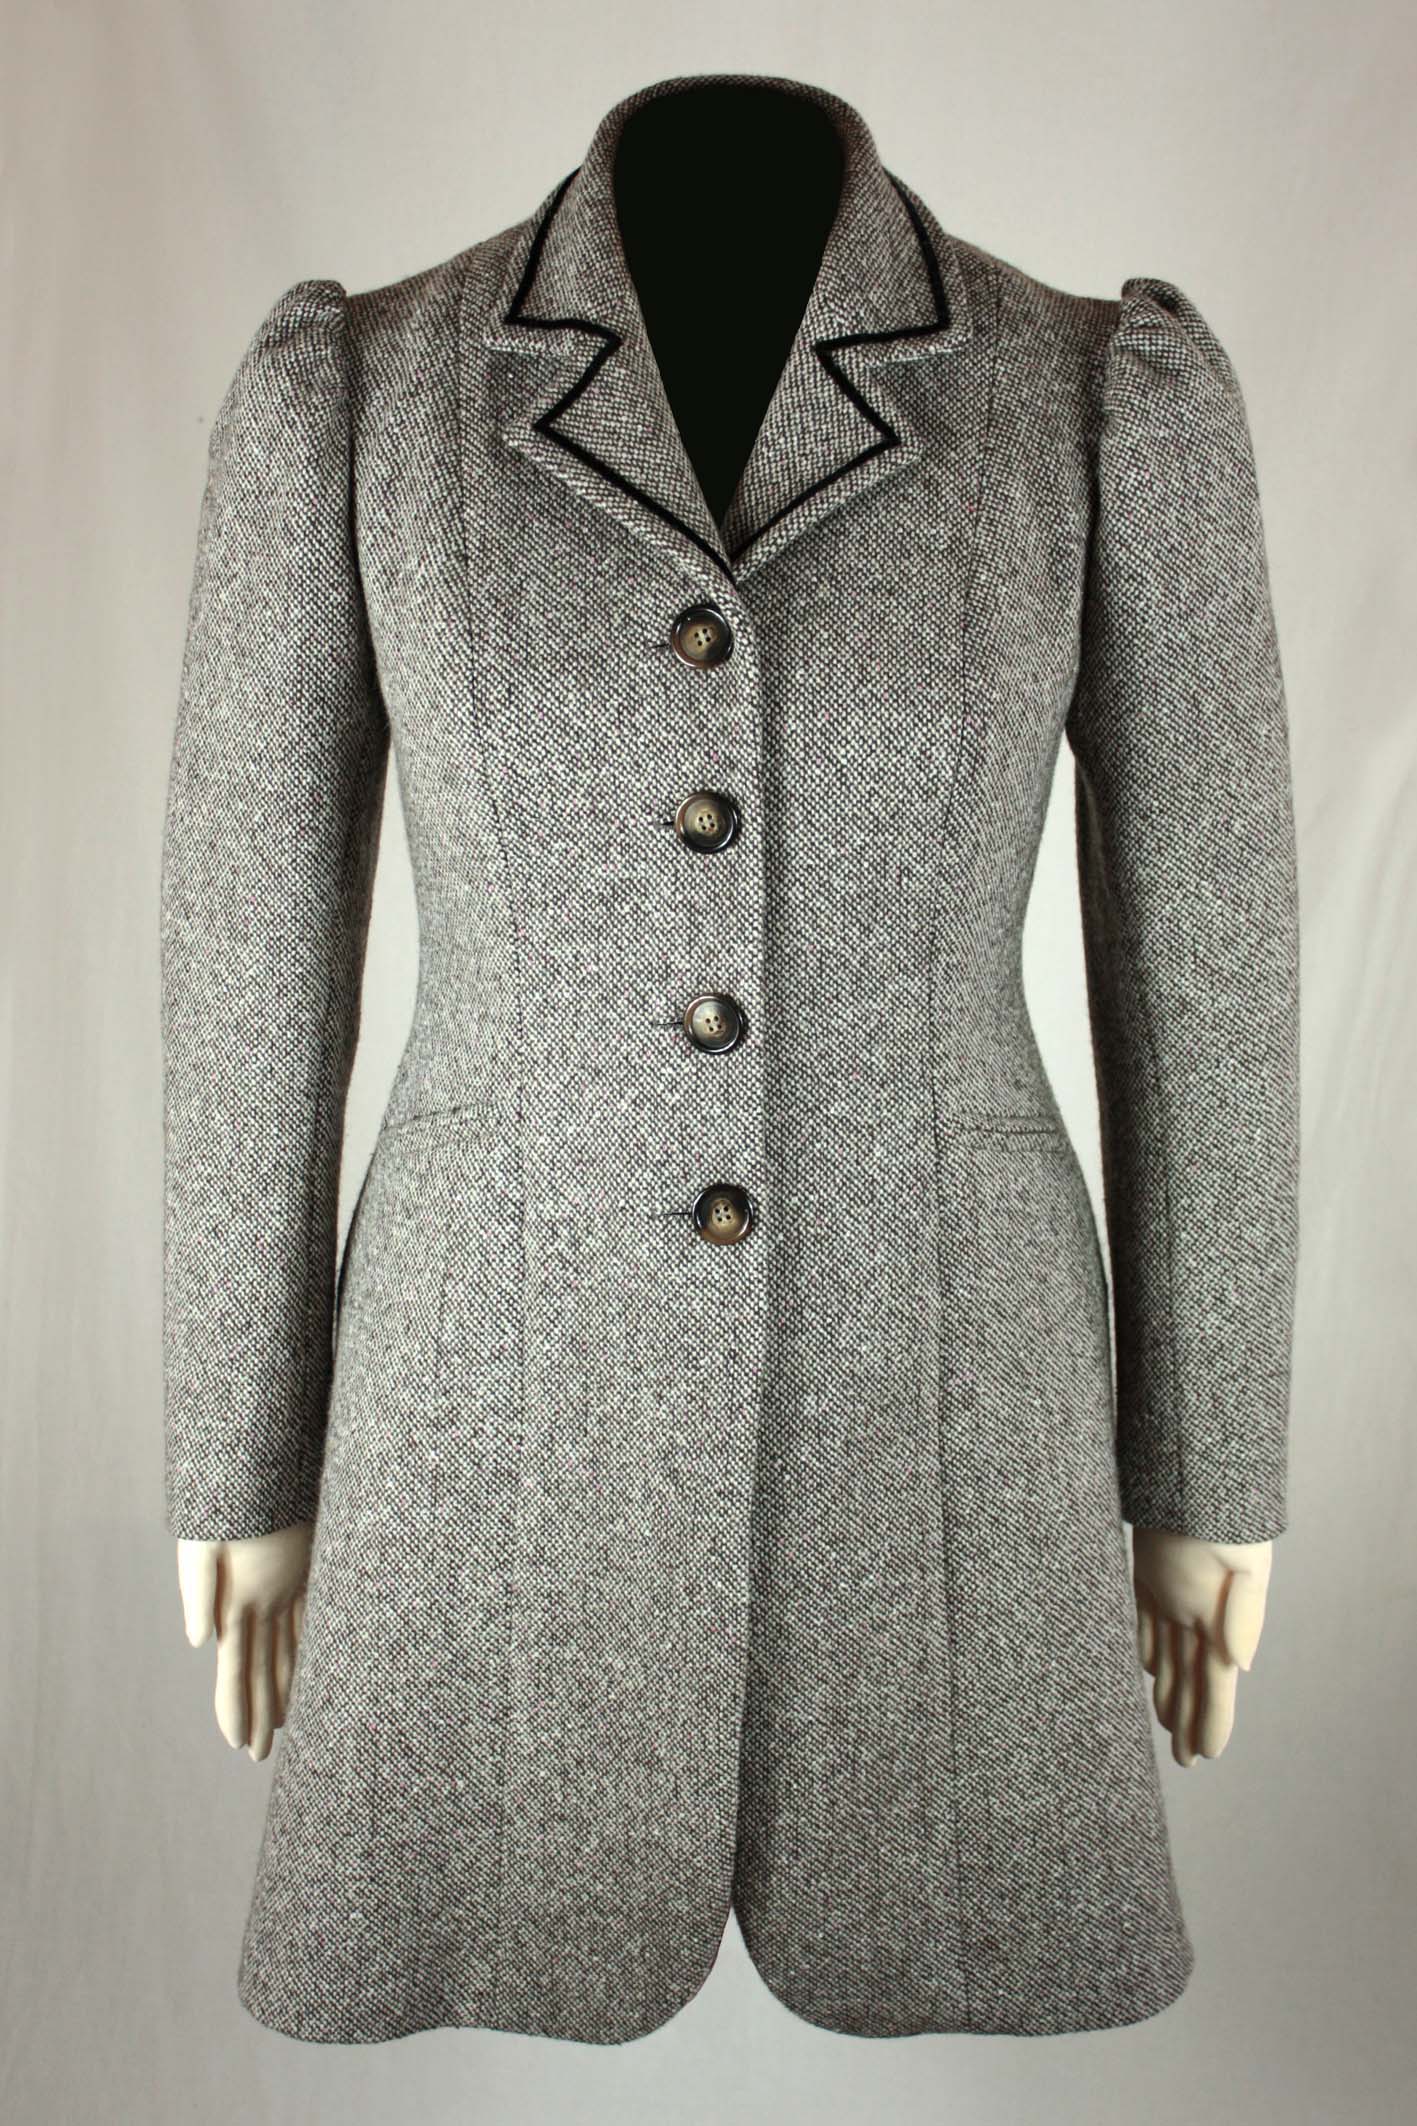 Edwardian Coat 1910 Sewing Pattern #0915 Size US 8-30 (EU 34-56) Pdf Download 